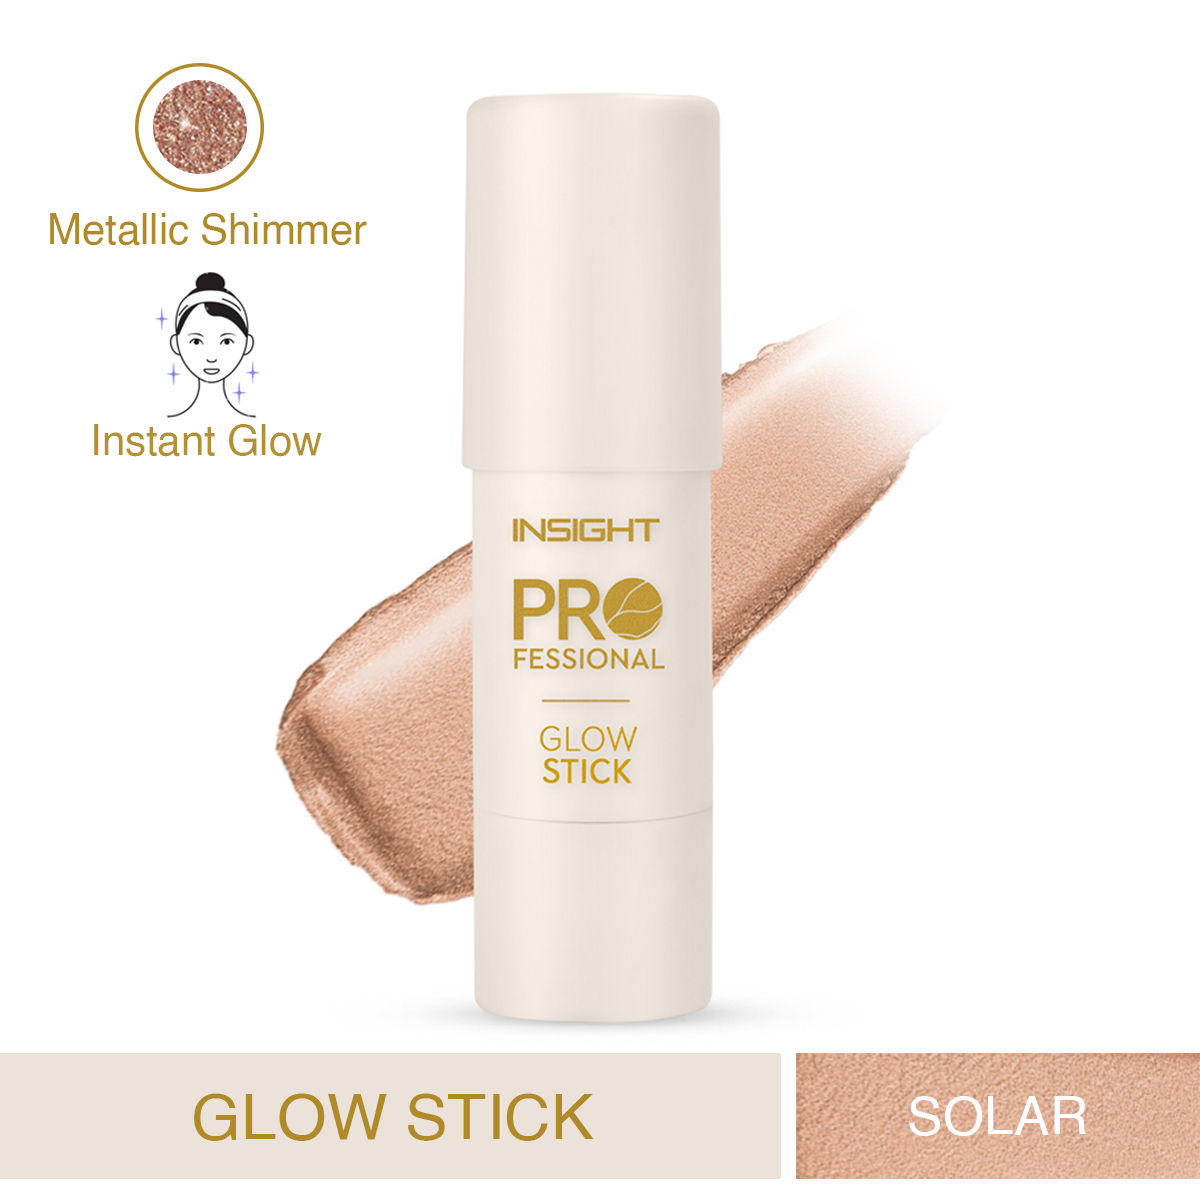 Buy Insight Professional Glow Stick Online